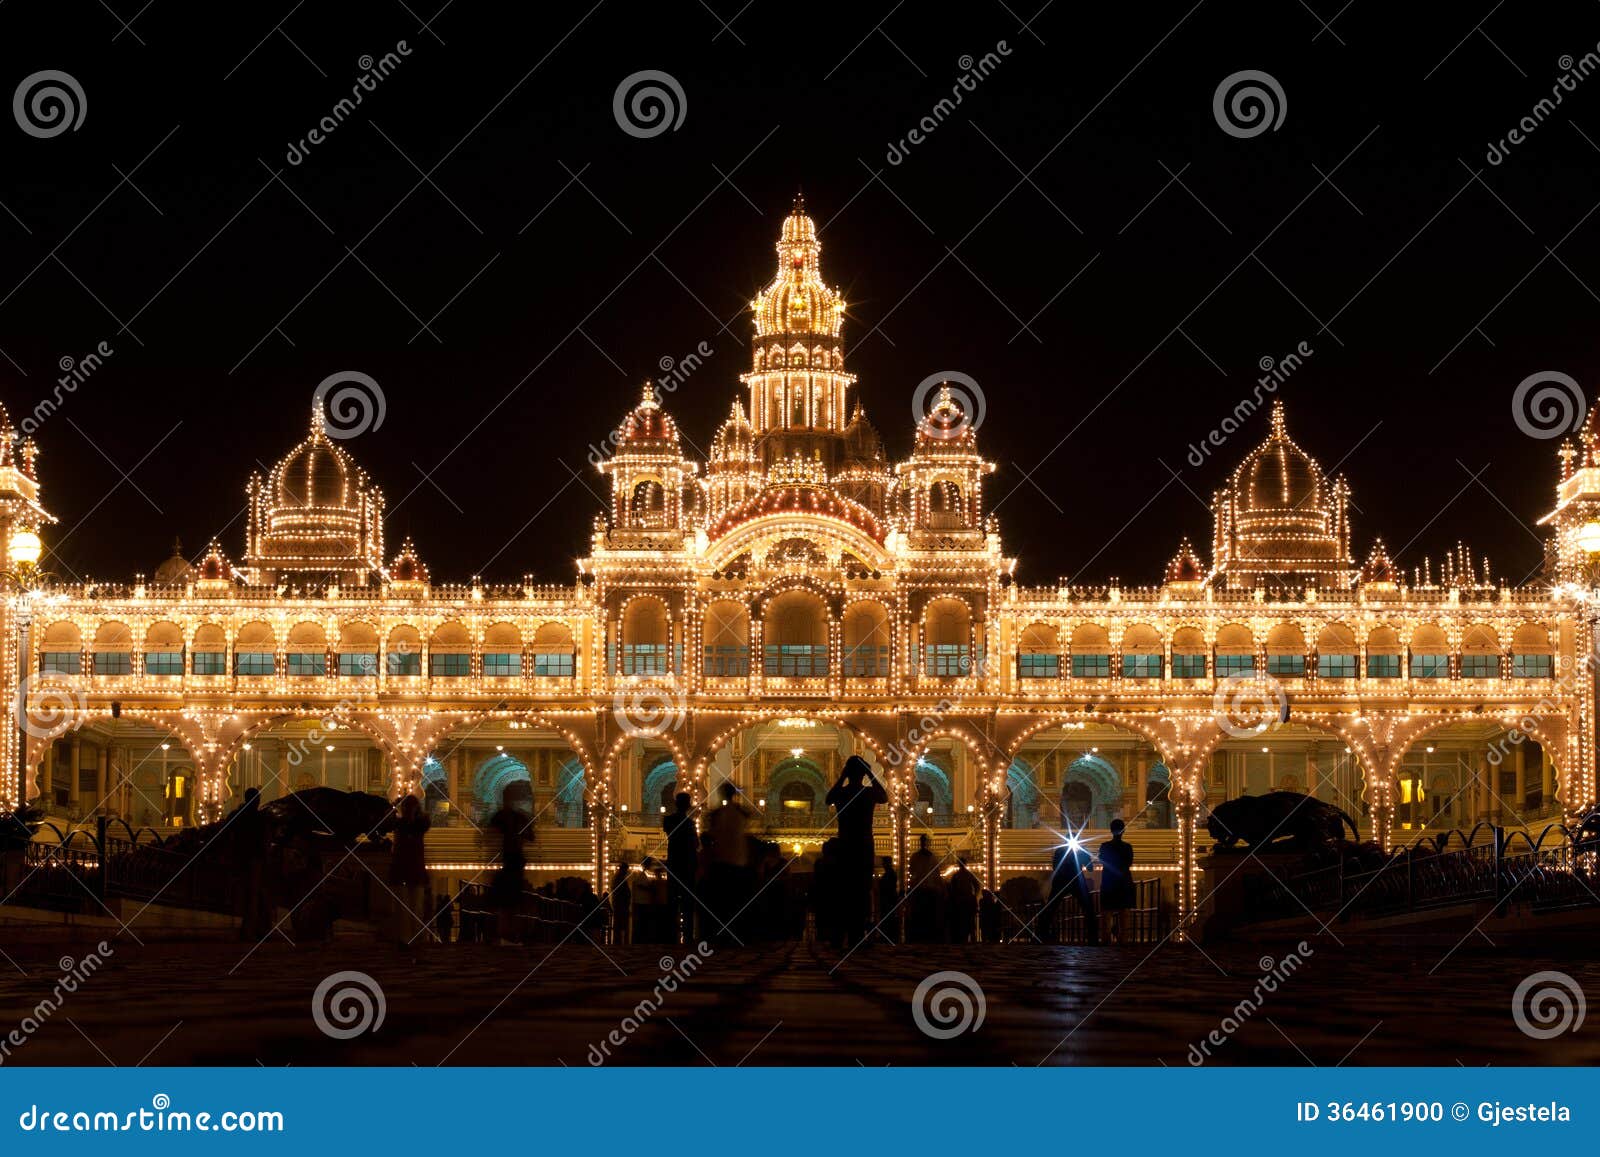 mysore palace lights